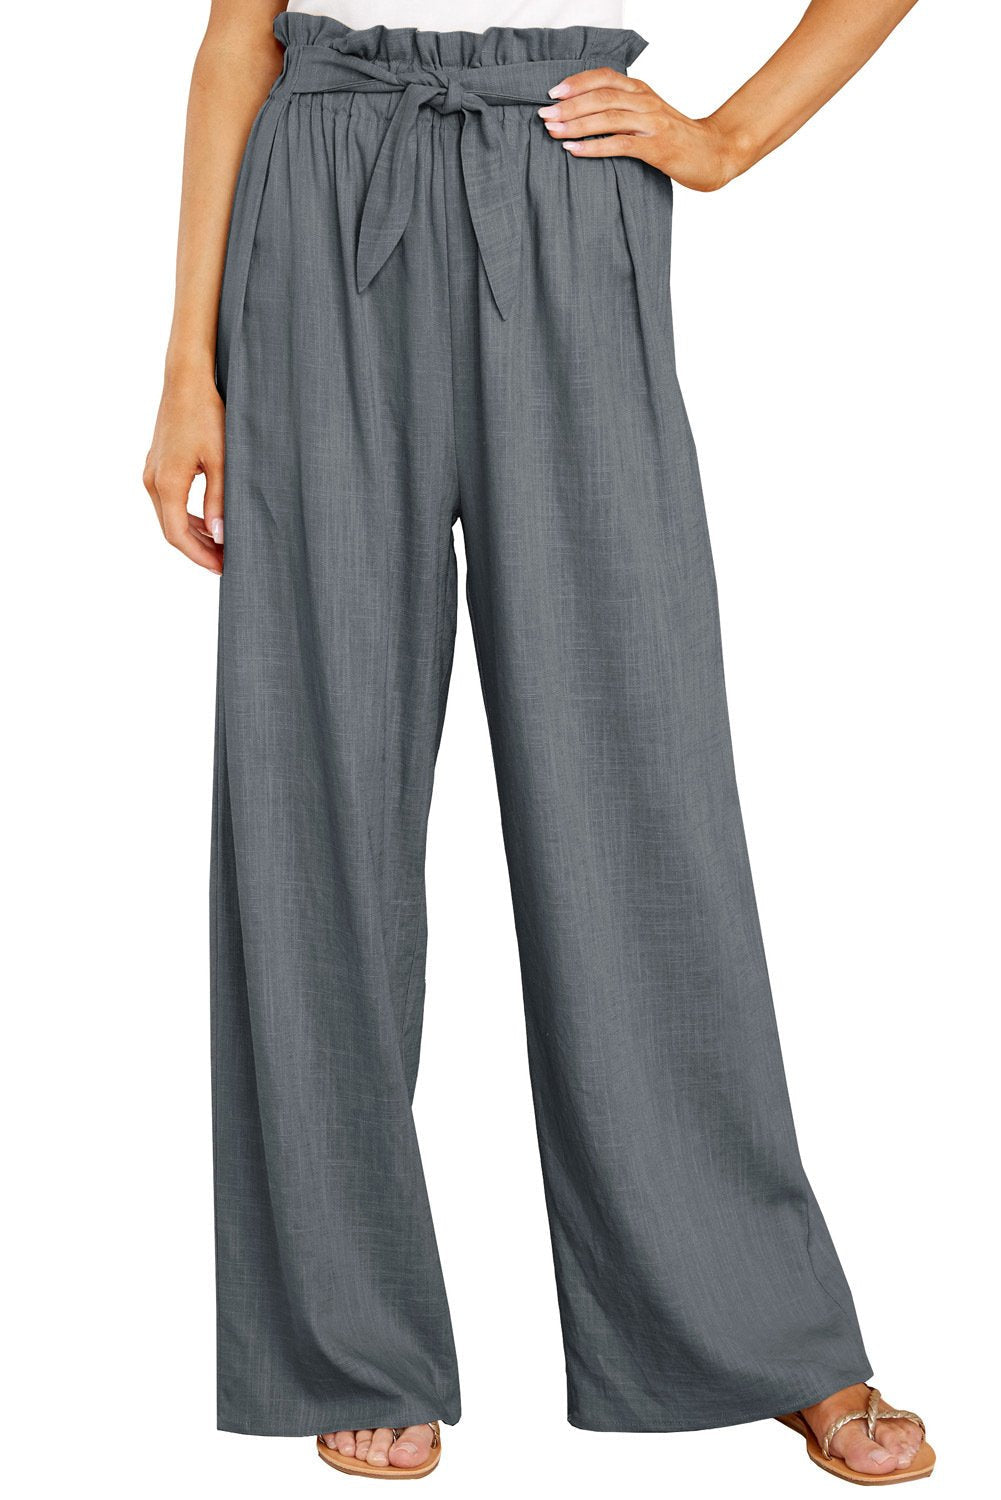 Casual Women Linen Long Pants-Women Bottoms-Gray-S-Free Shipping Leatheretro